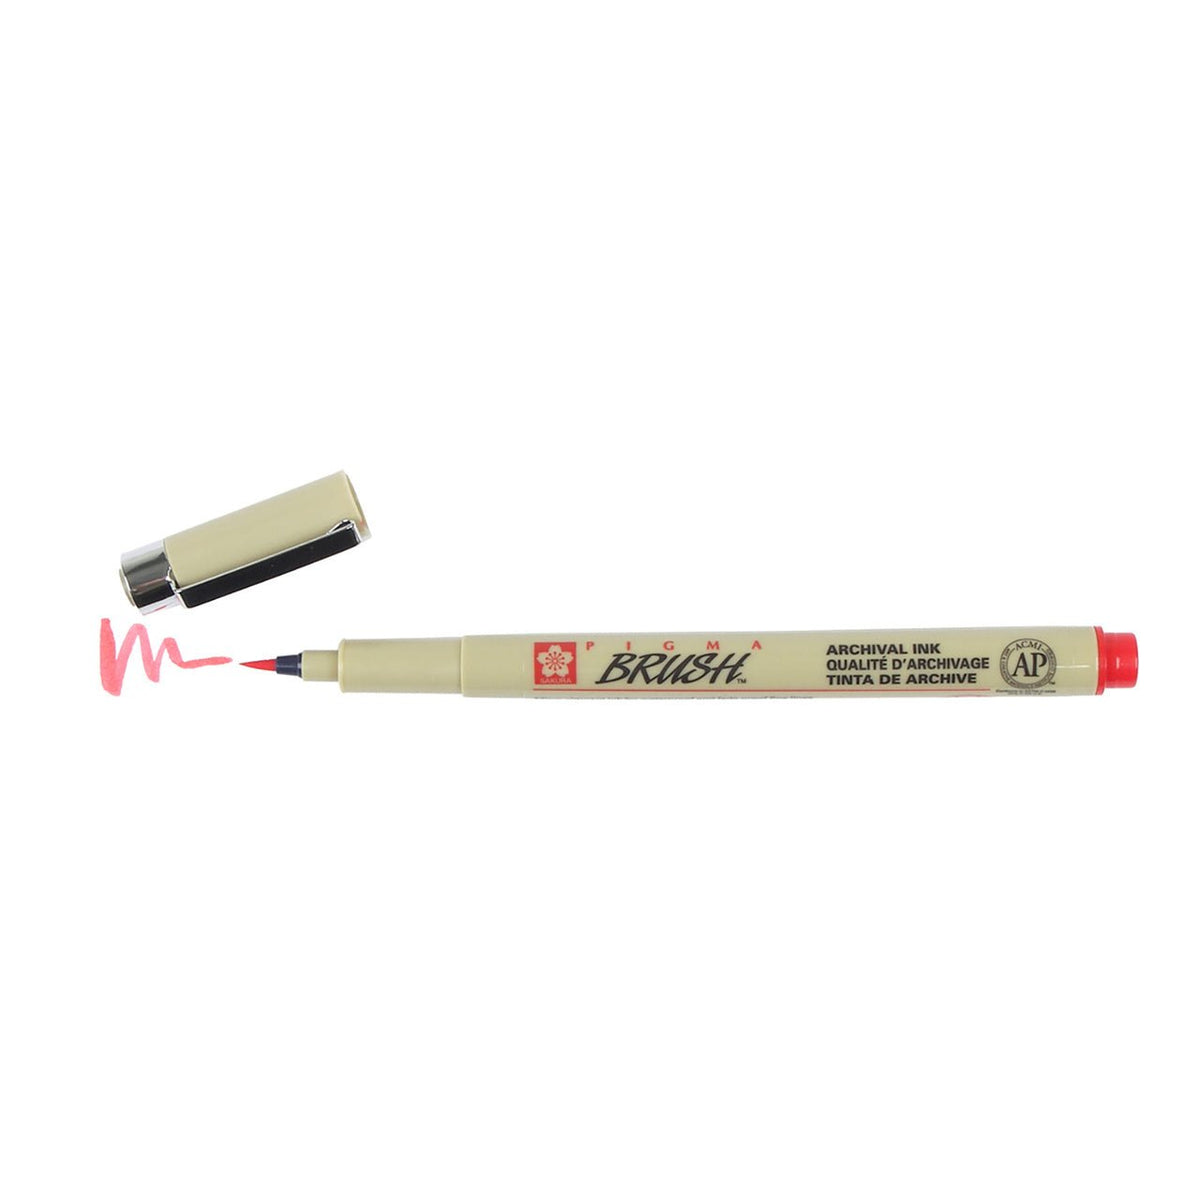 Sakura Pigma Micron Fineliner 6 set + 1 Brush Pen